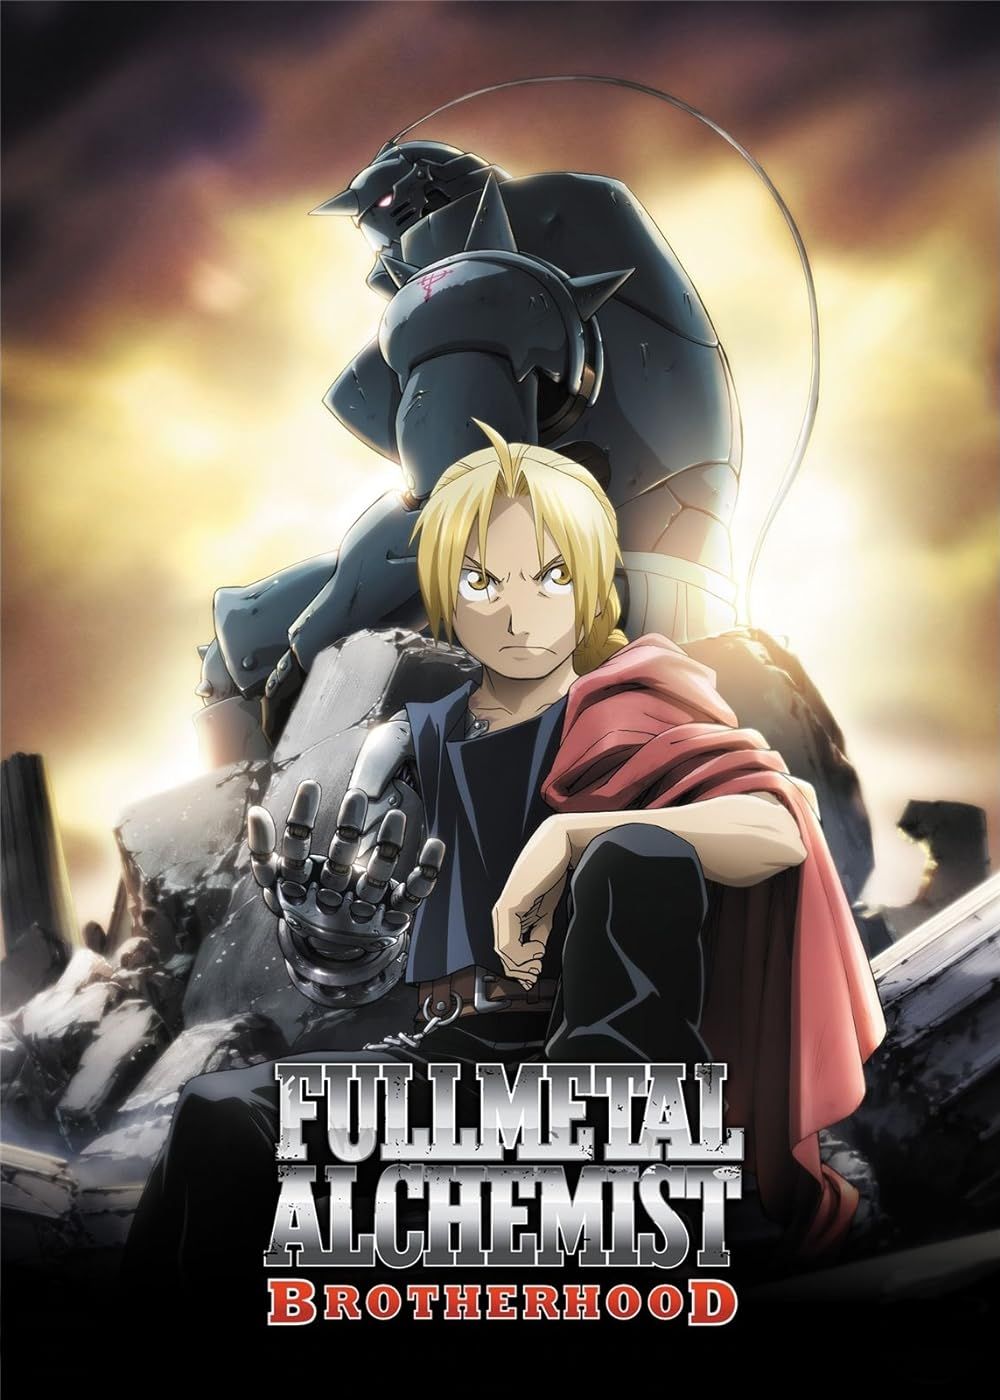 Edward and Alphonse Elric on the poster of Fullmetal Alchemist Brotherhood